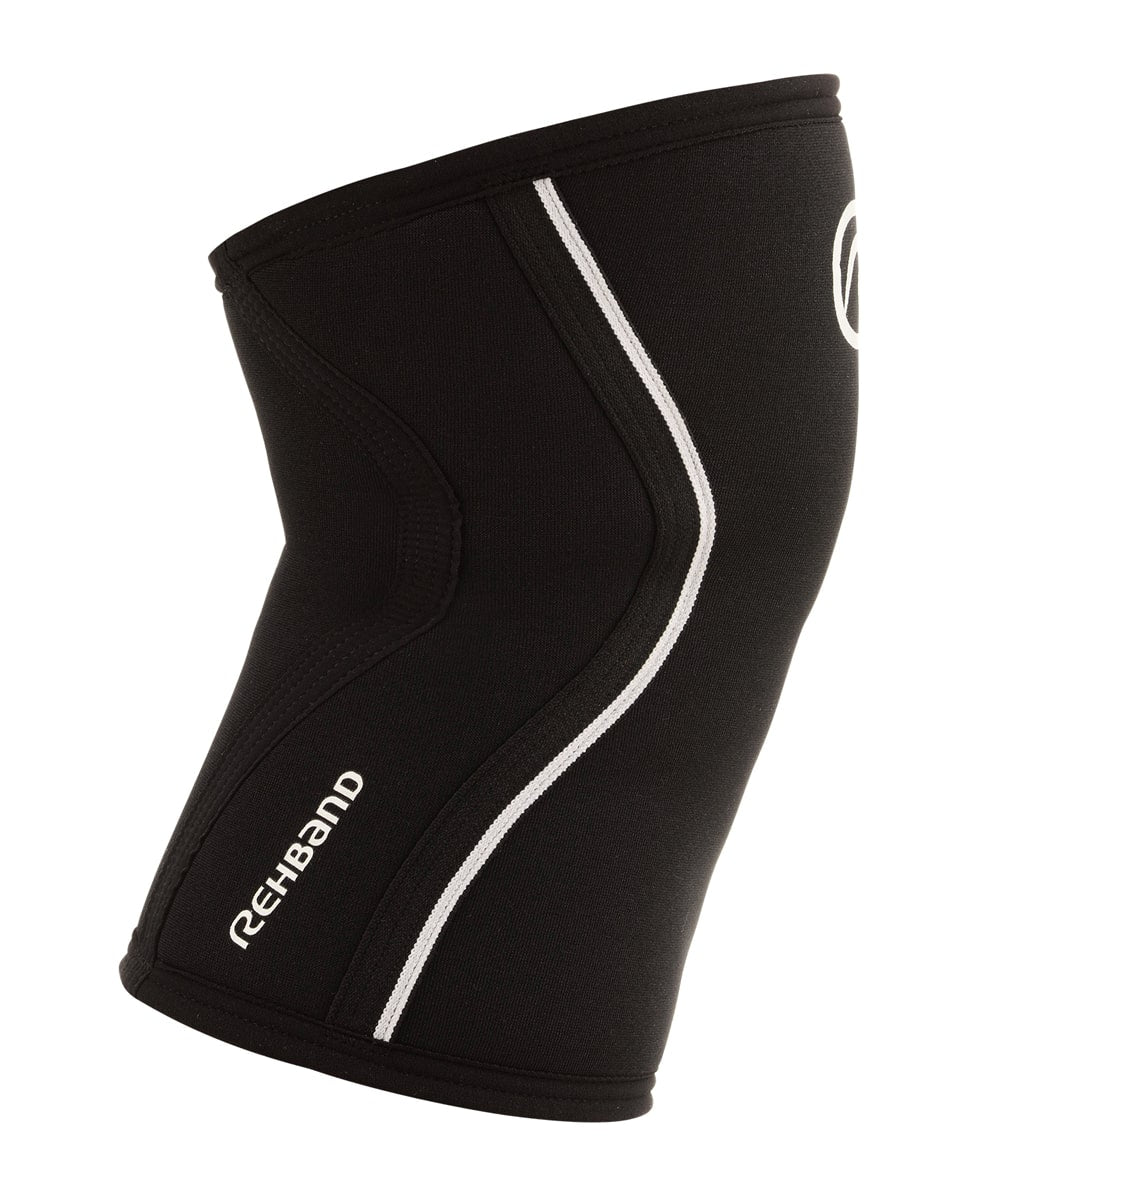 105206-03 - Rehband Rx Knee Sleeve - Black - 3mm - Side